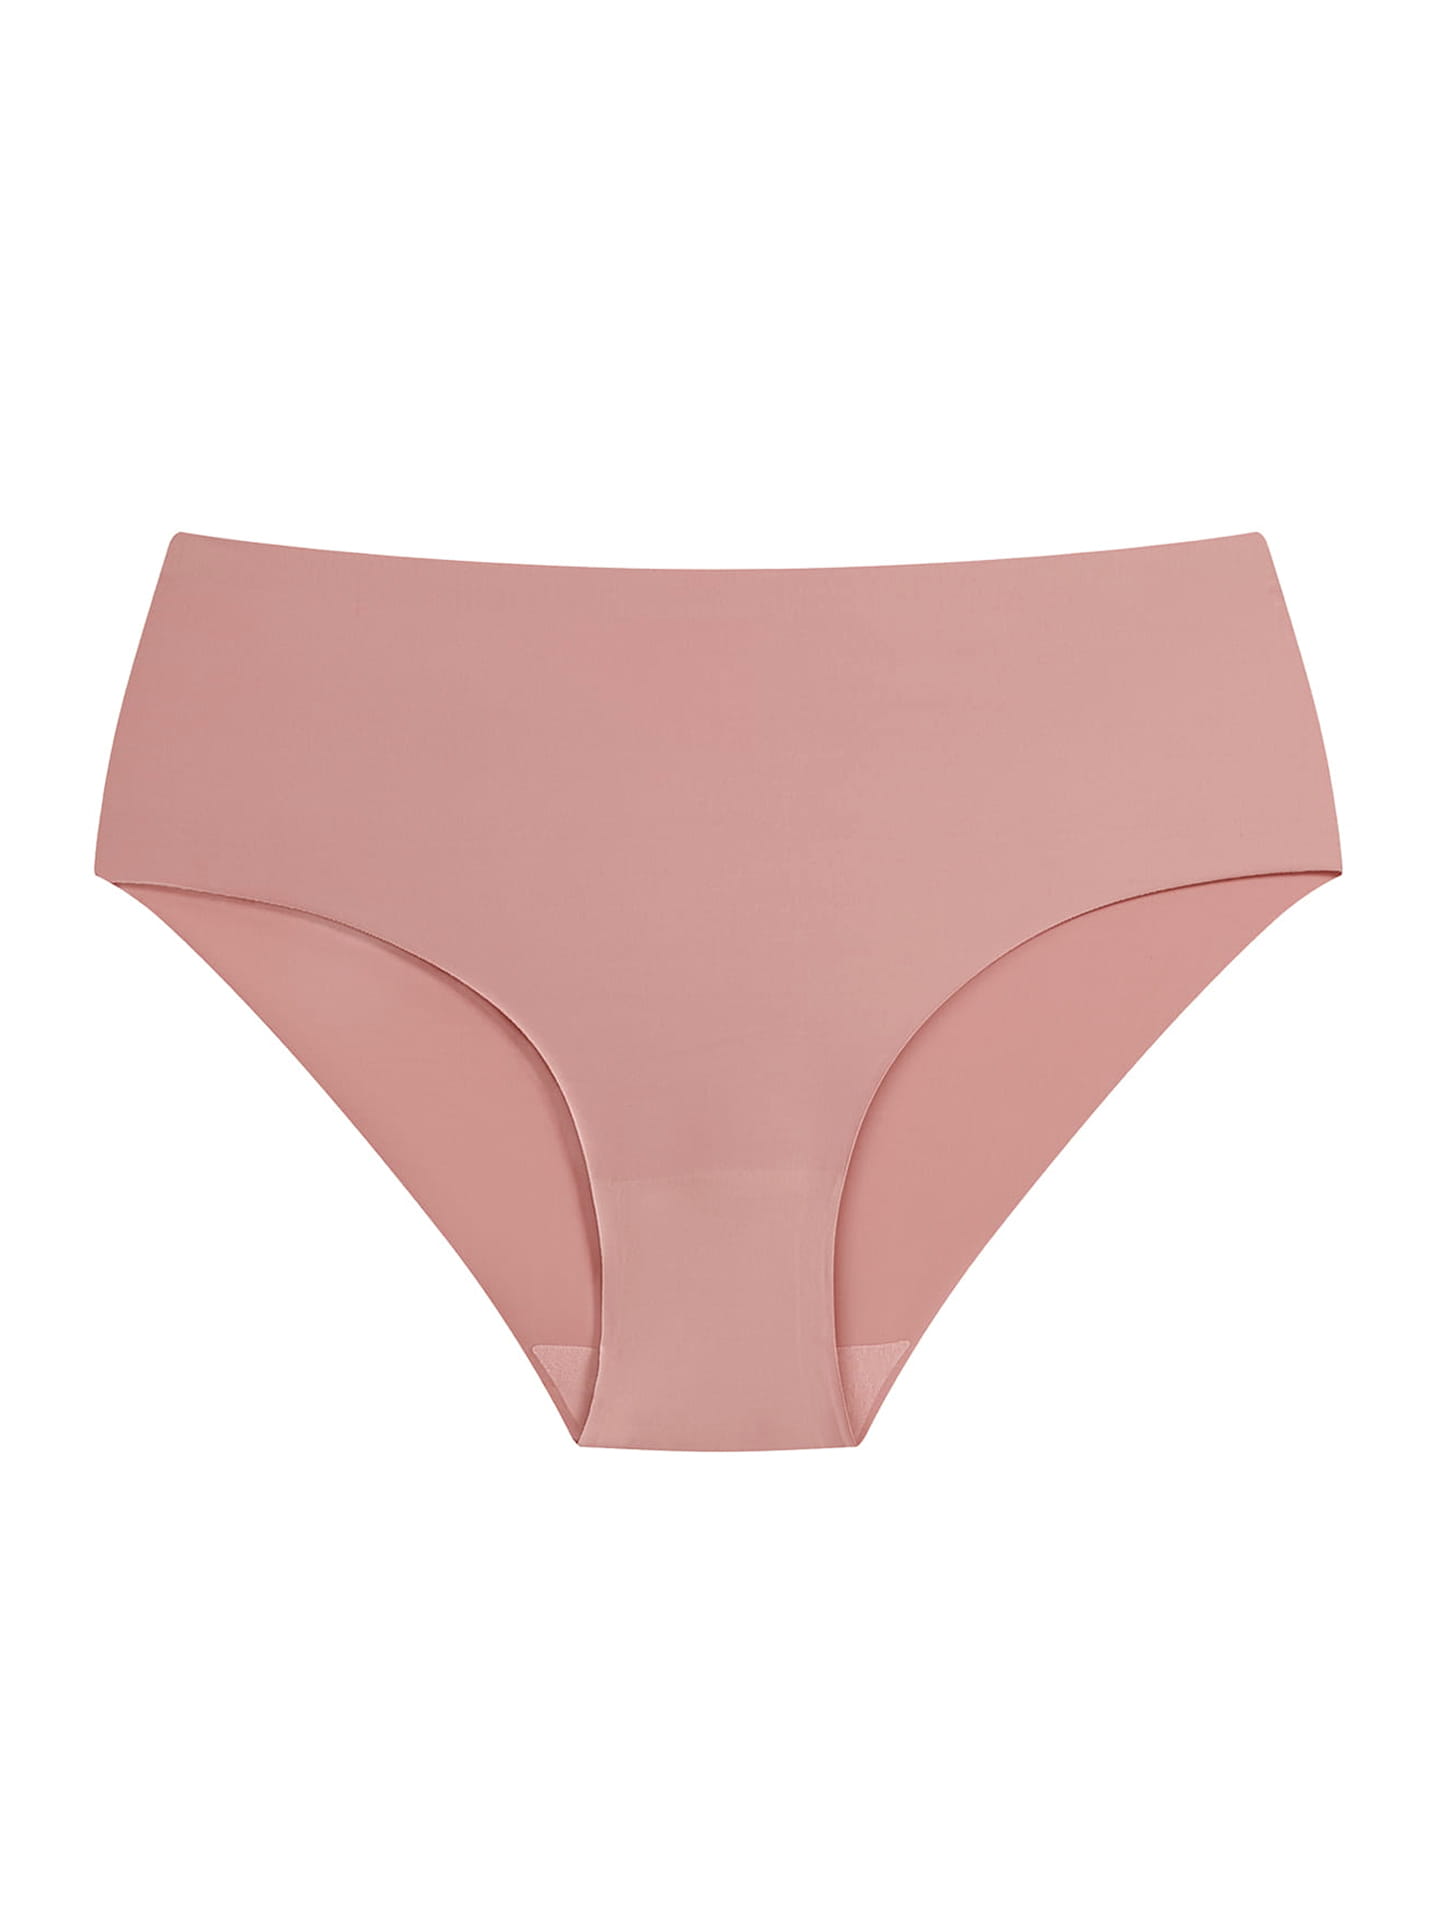 Monochrome seamless brief curvy in dusty pink, 2.99€